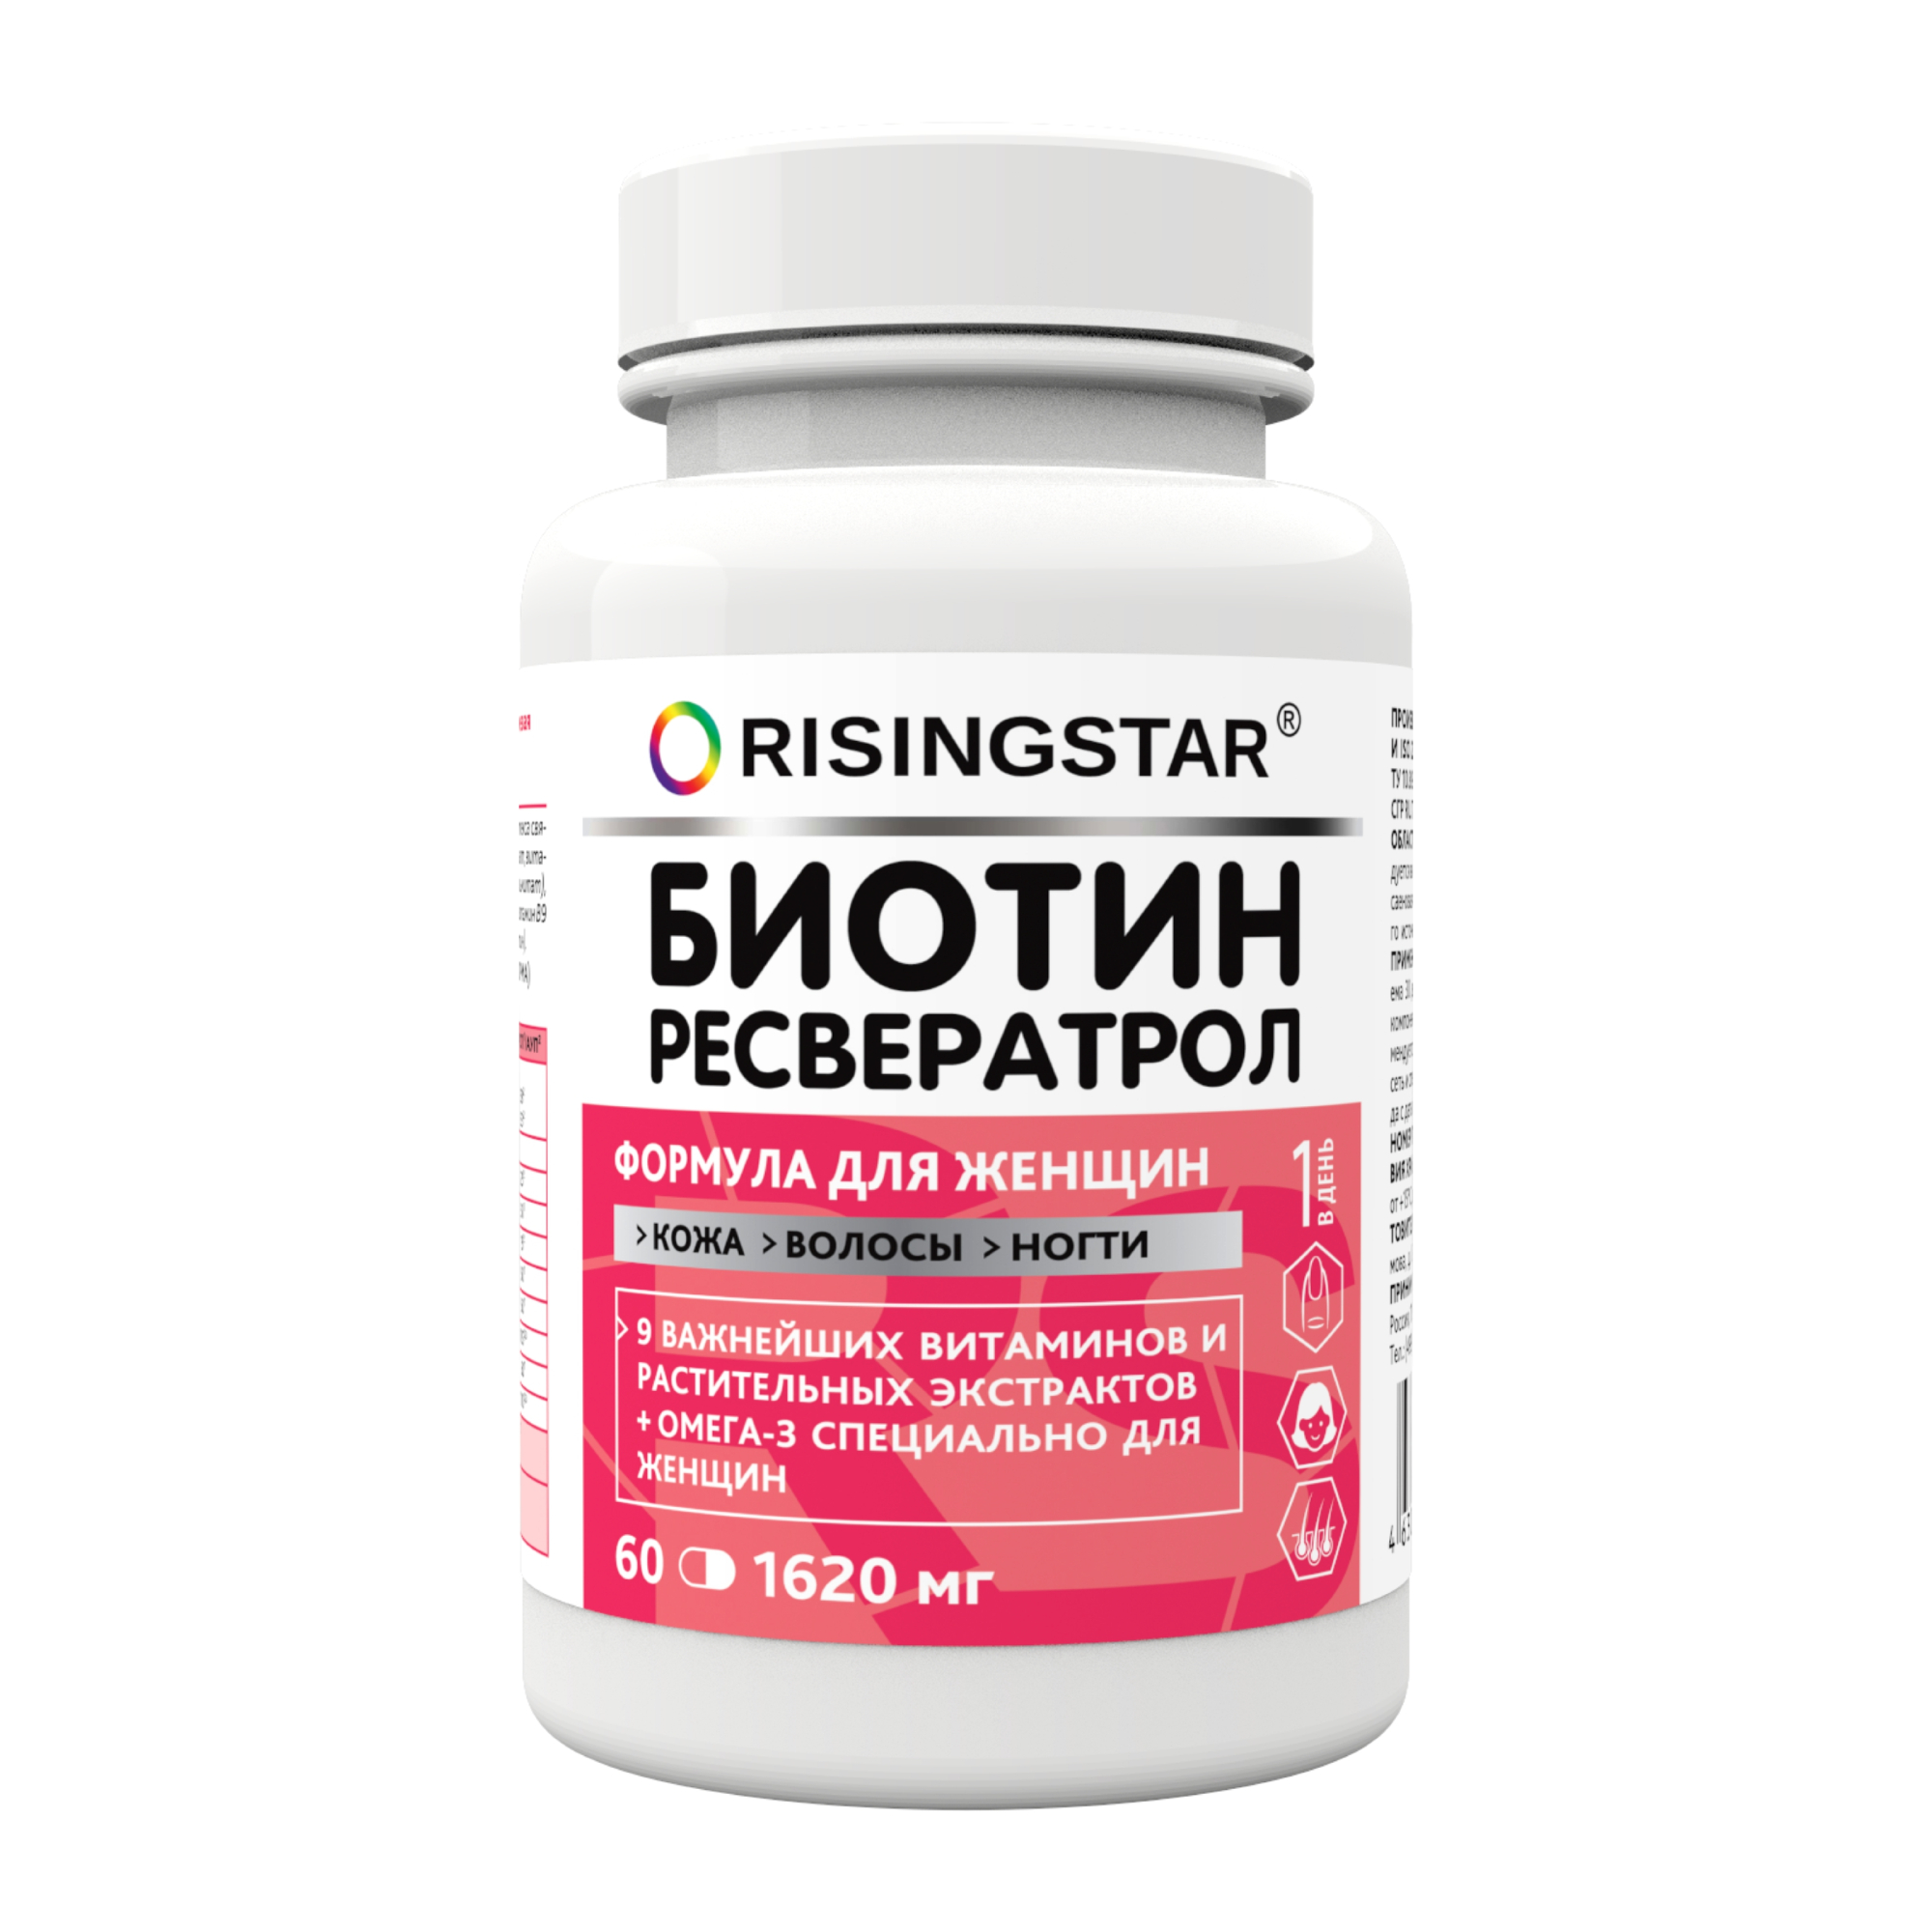 БАД Risingstar биотин+фолиевая кислота с омега-3 для женщин 60 таблеток, 100 г бад для женского здоровья 1win биотин фолиевая кислота омега 3 в капсулах 30 шт